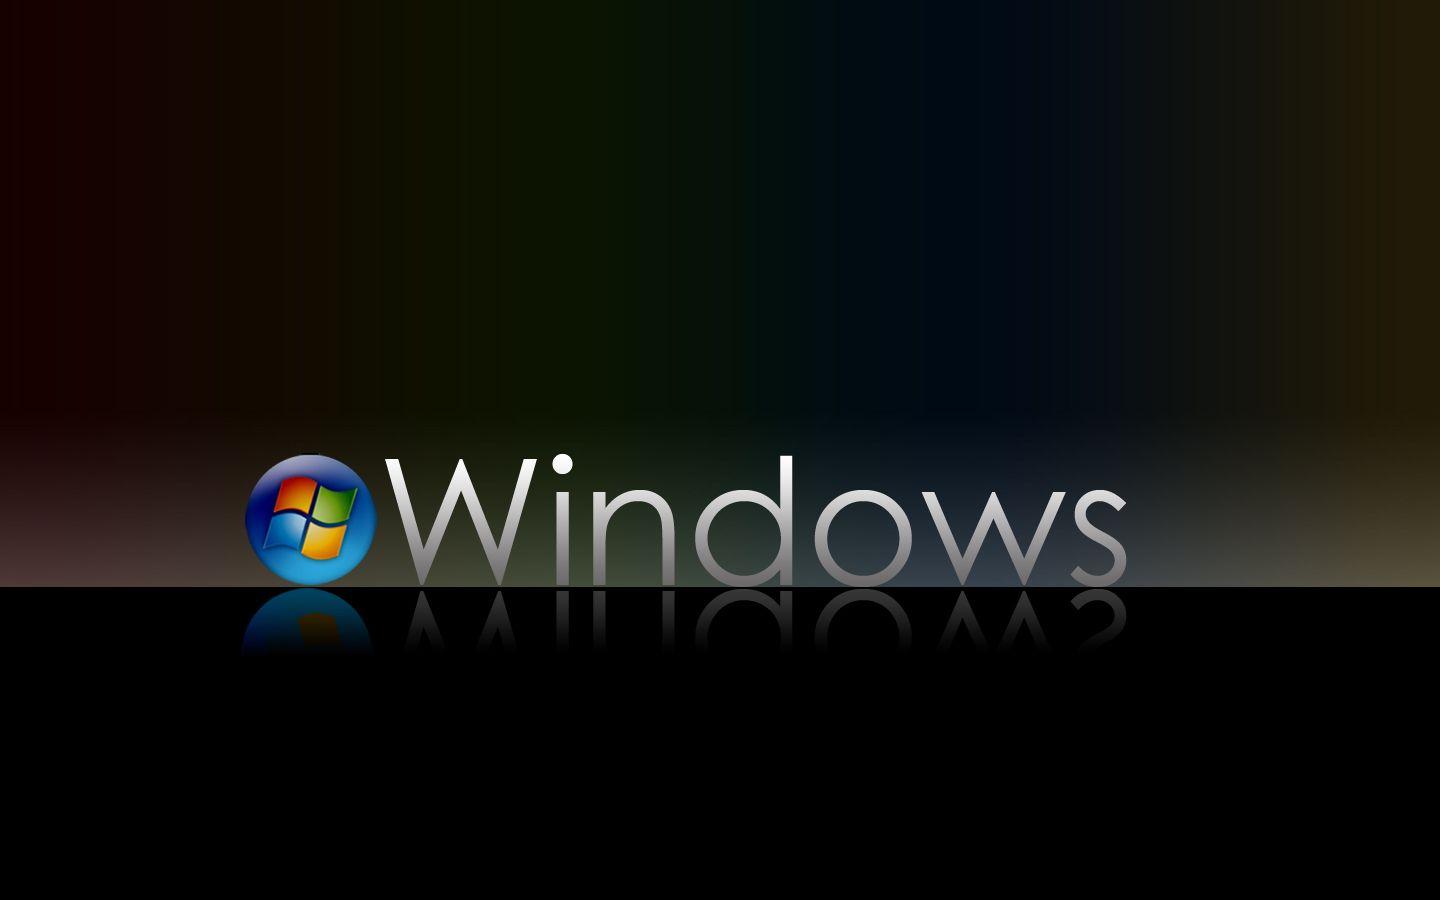 Windows Vista Wallpaper Set 9